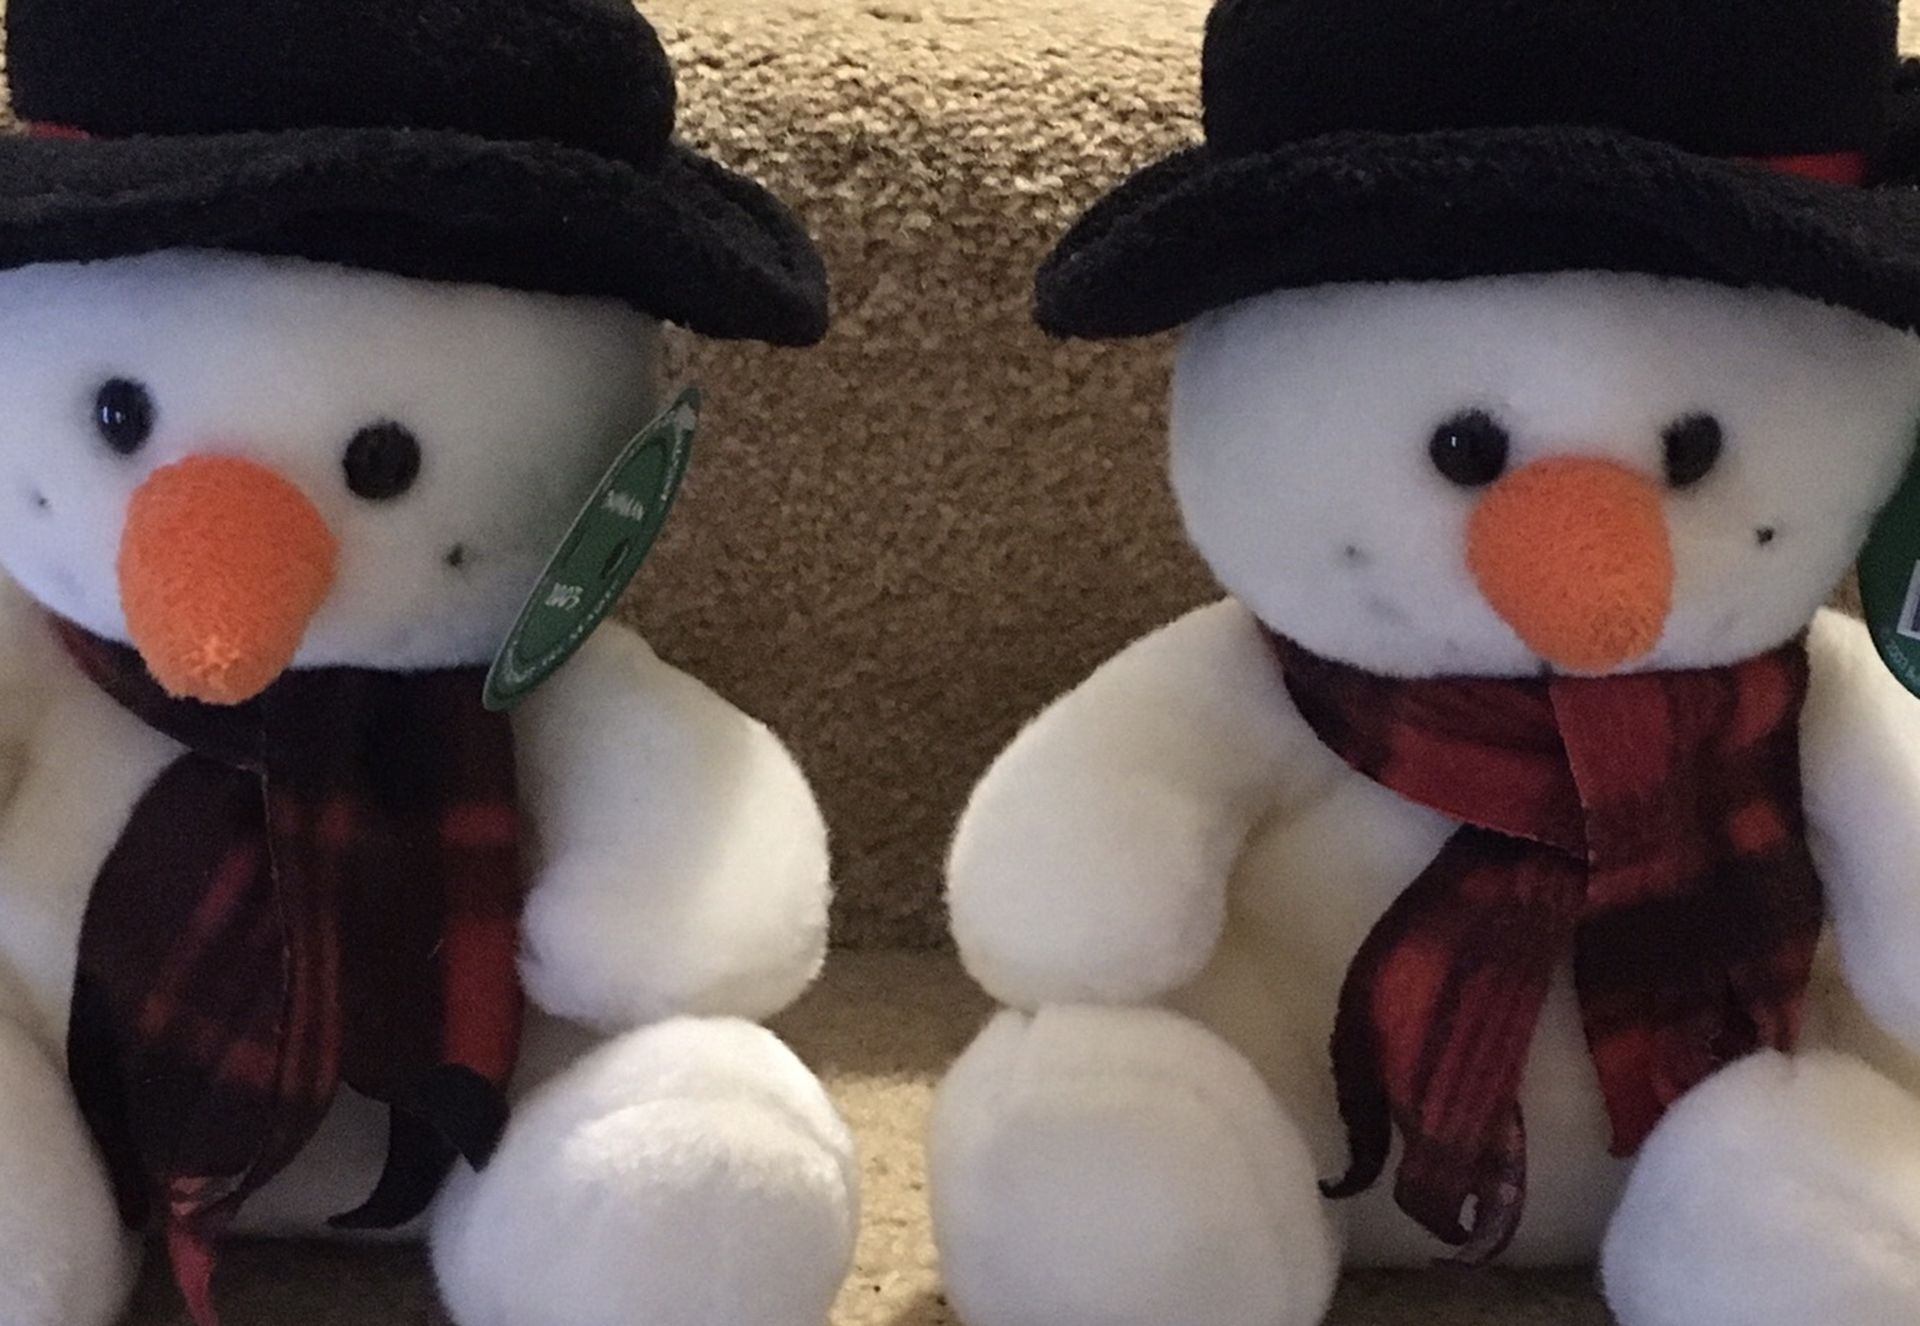 Pending: Two Build-A-Bear Snowman Stuffed Animals